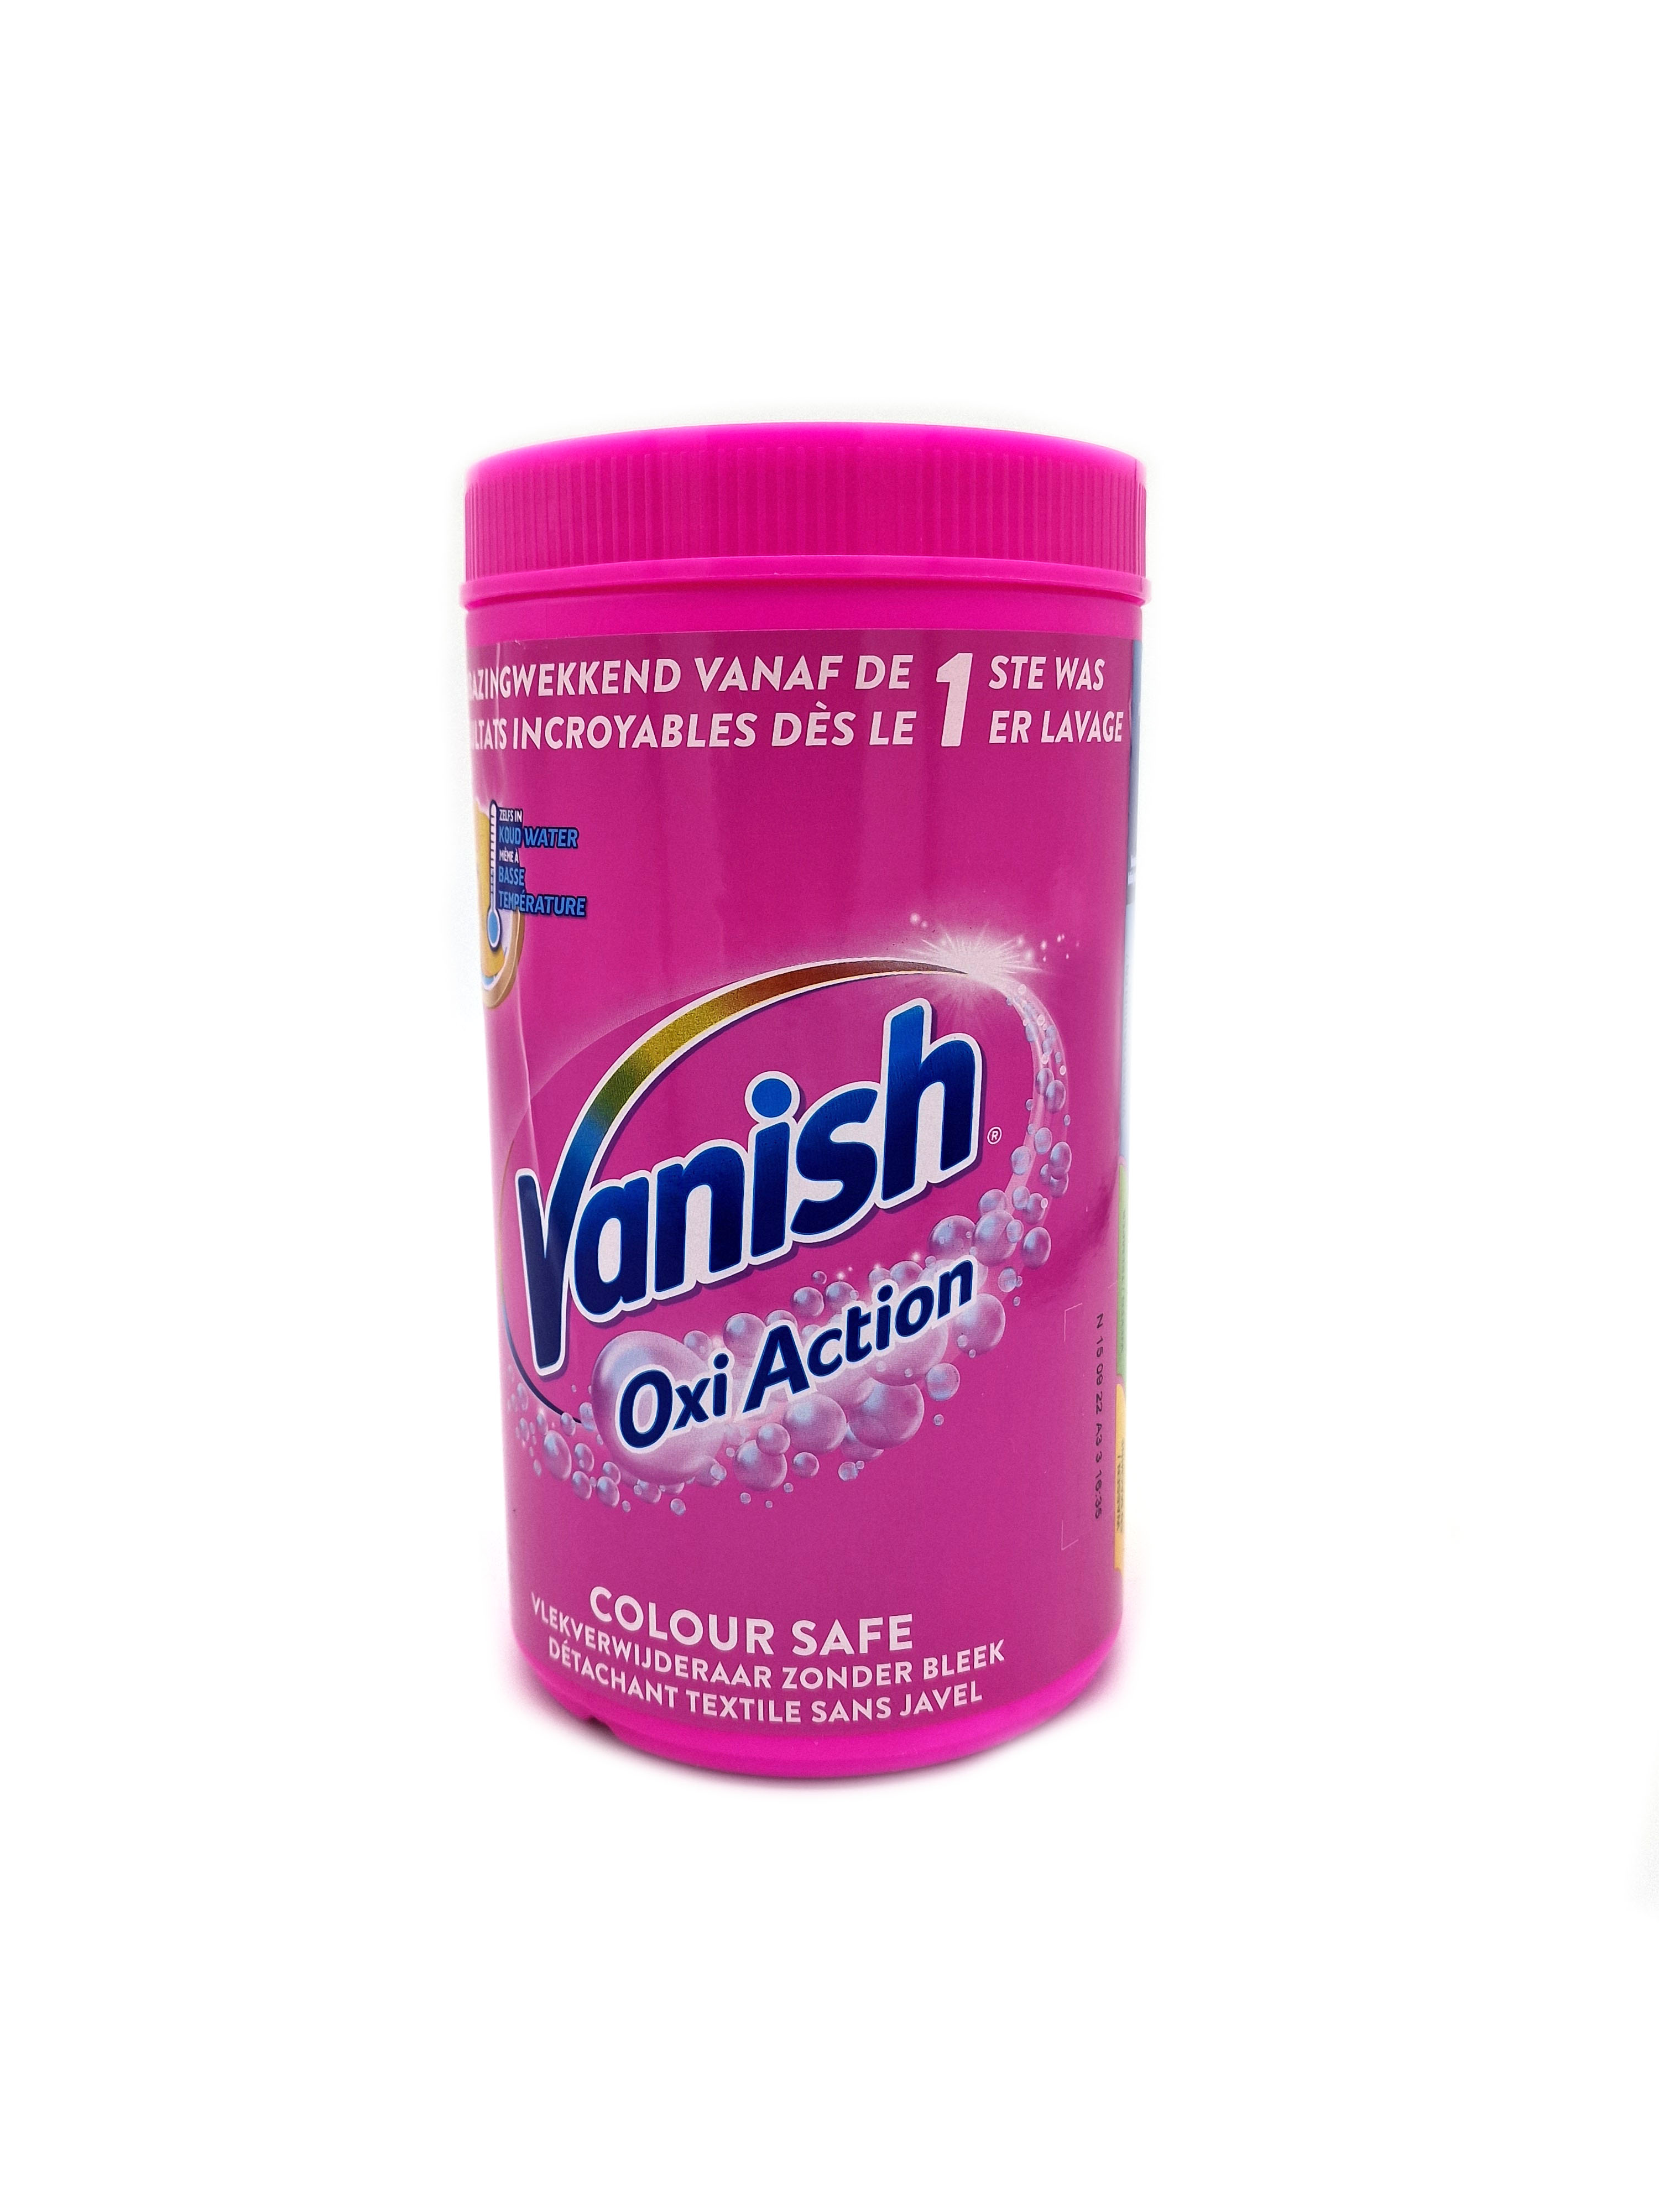 Vanish Oxi Action Colour Safe Pink 1500g